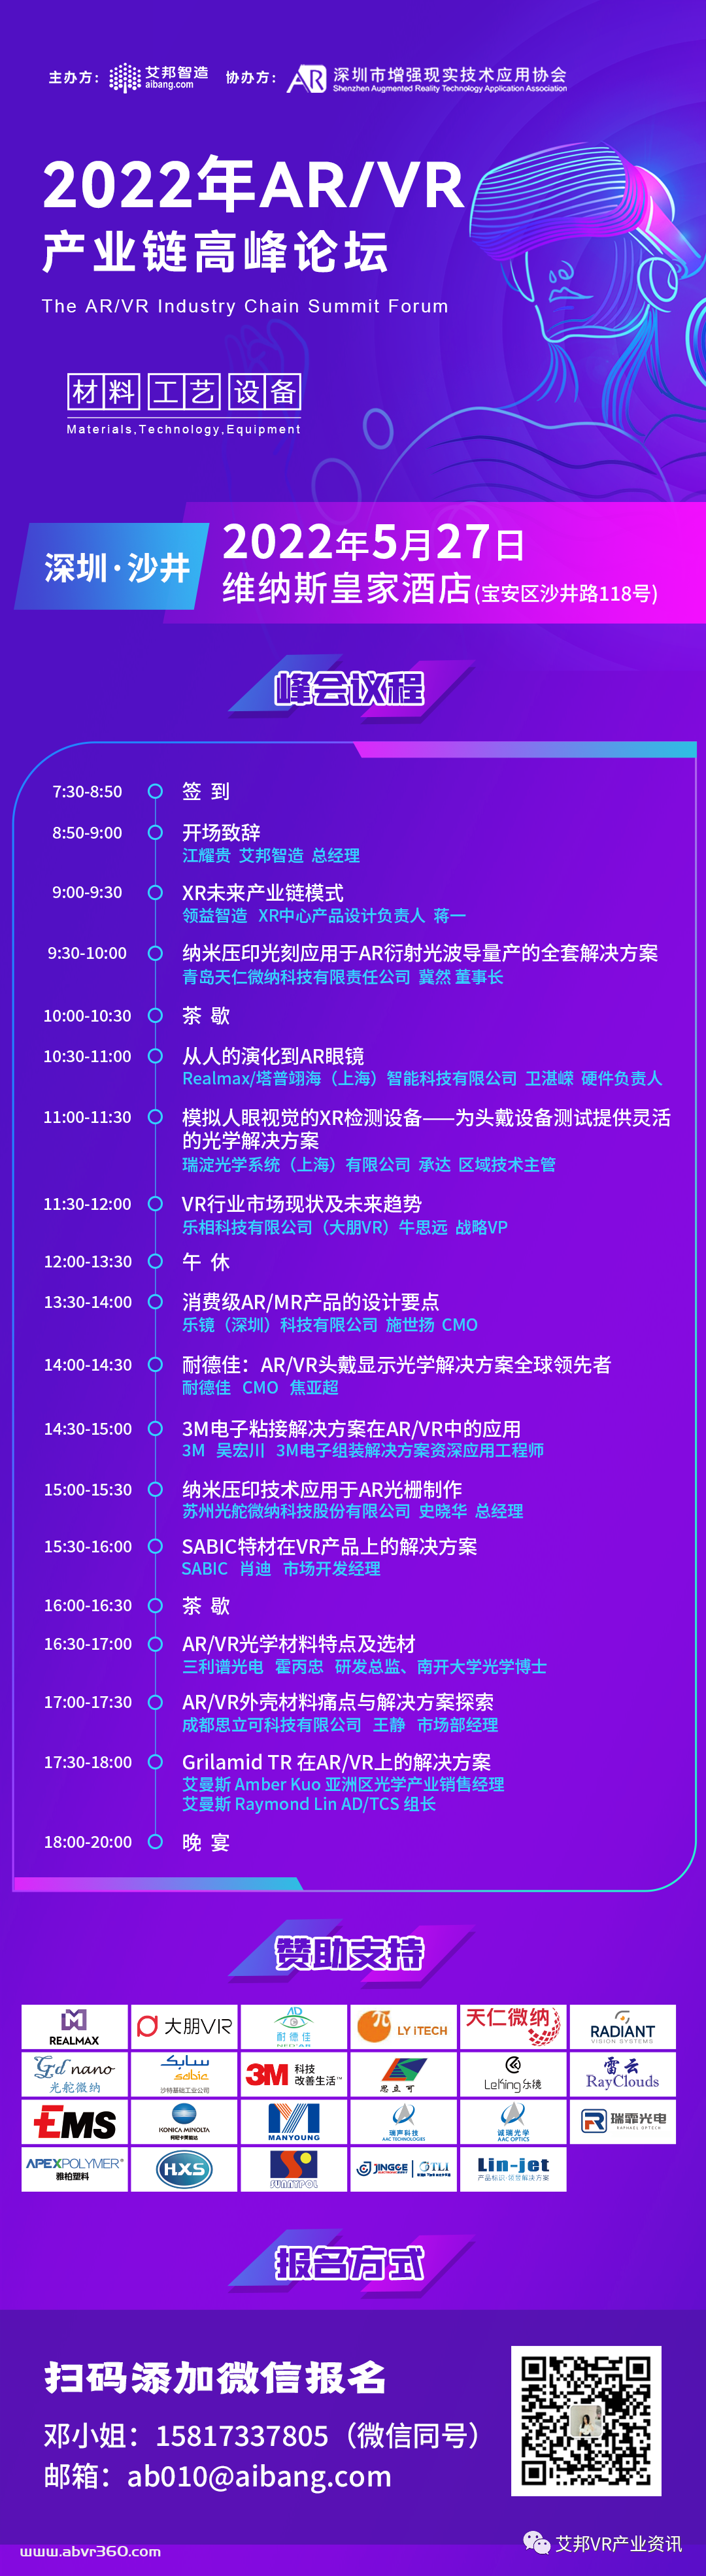 SABIC将参与5月27日深圳AR/VR高峰论坛